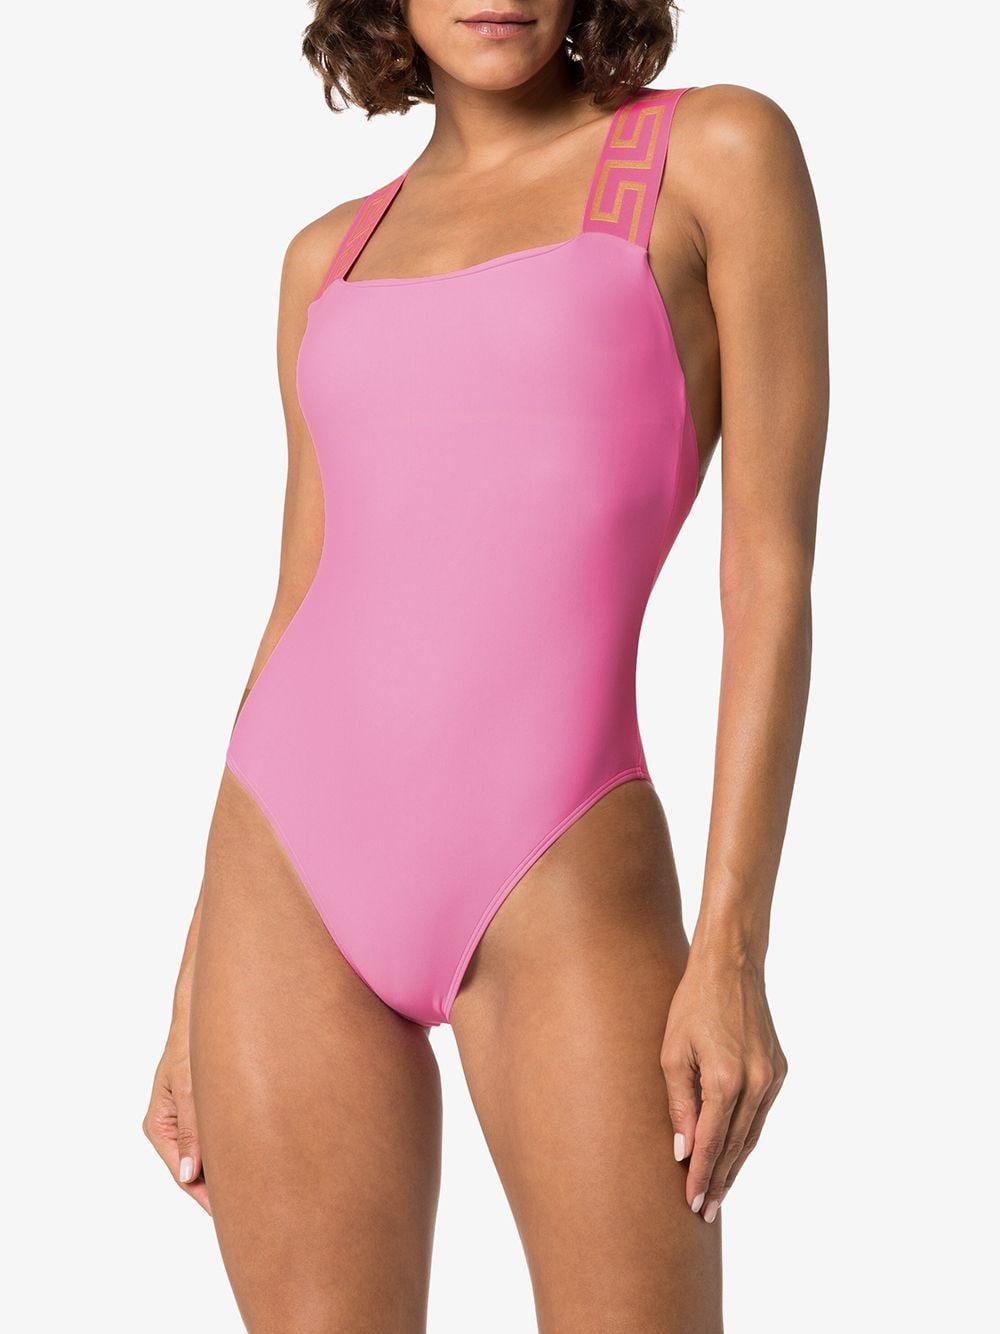 - Save 59% Versace Synthetic Bikini Top With Greek Border in Fuchsia Pink Womens Beachwear and swimwear outfits Versace Beachwear and swimwear outfits 